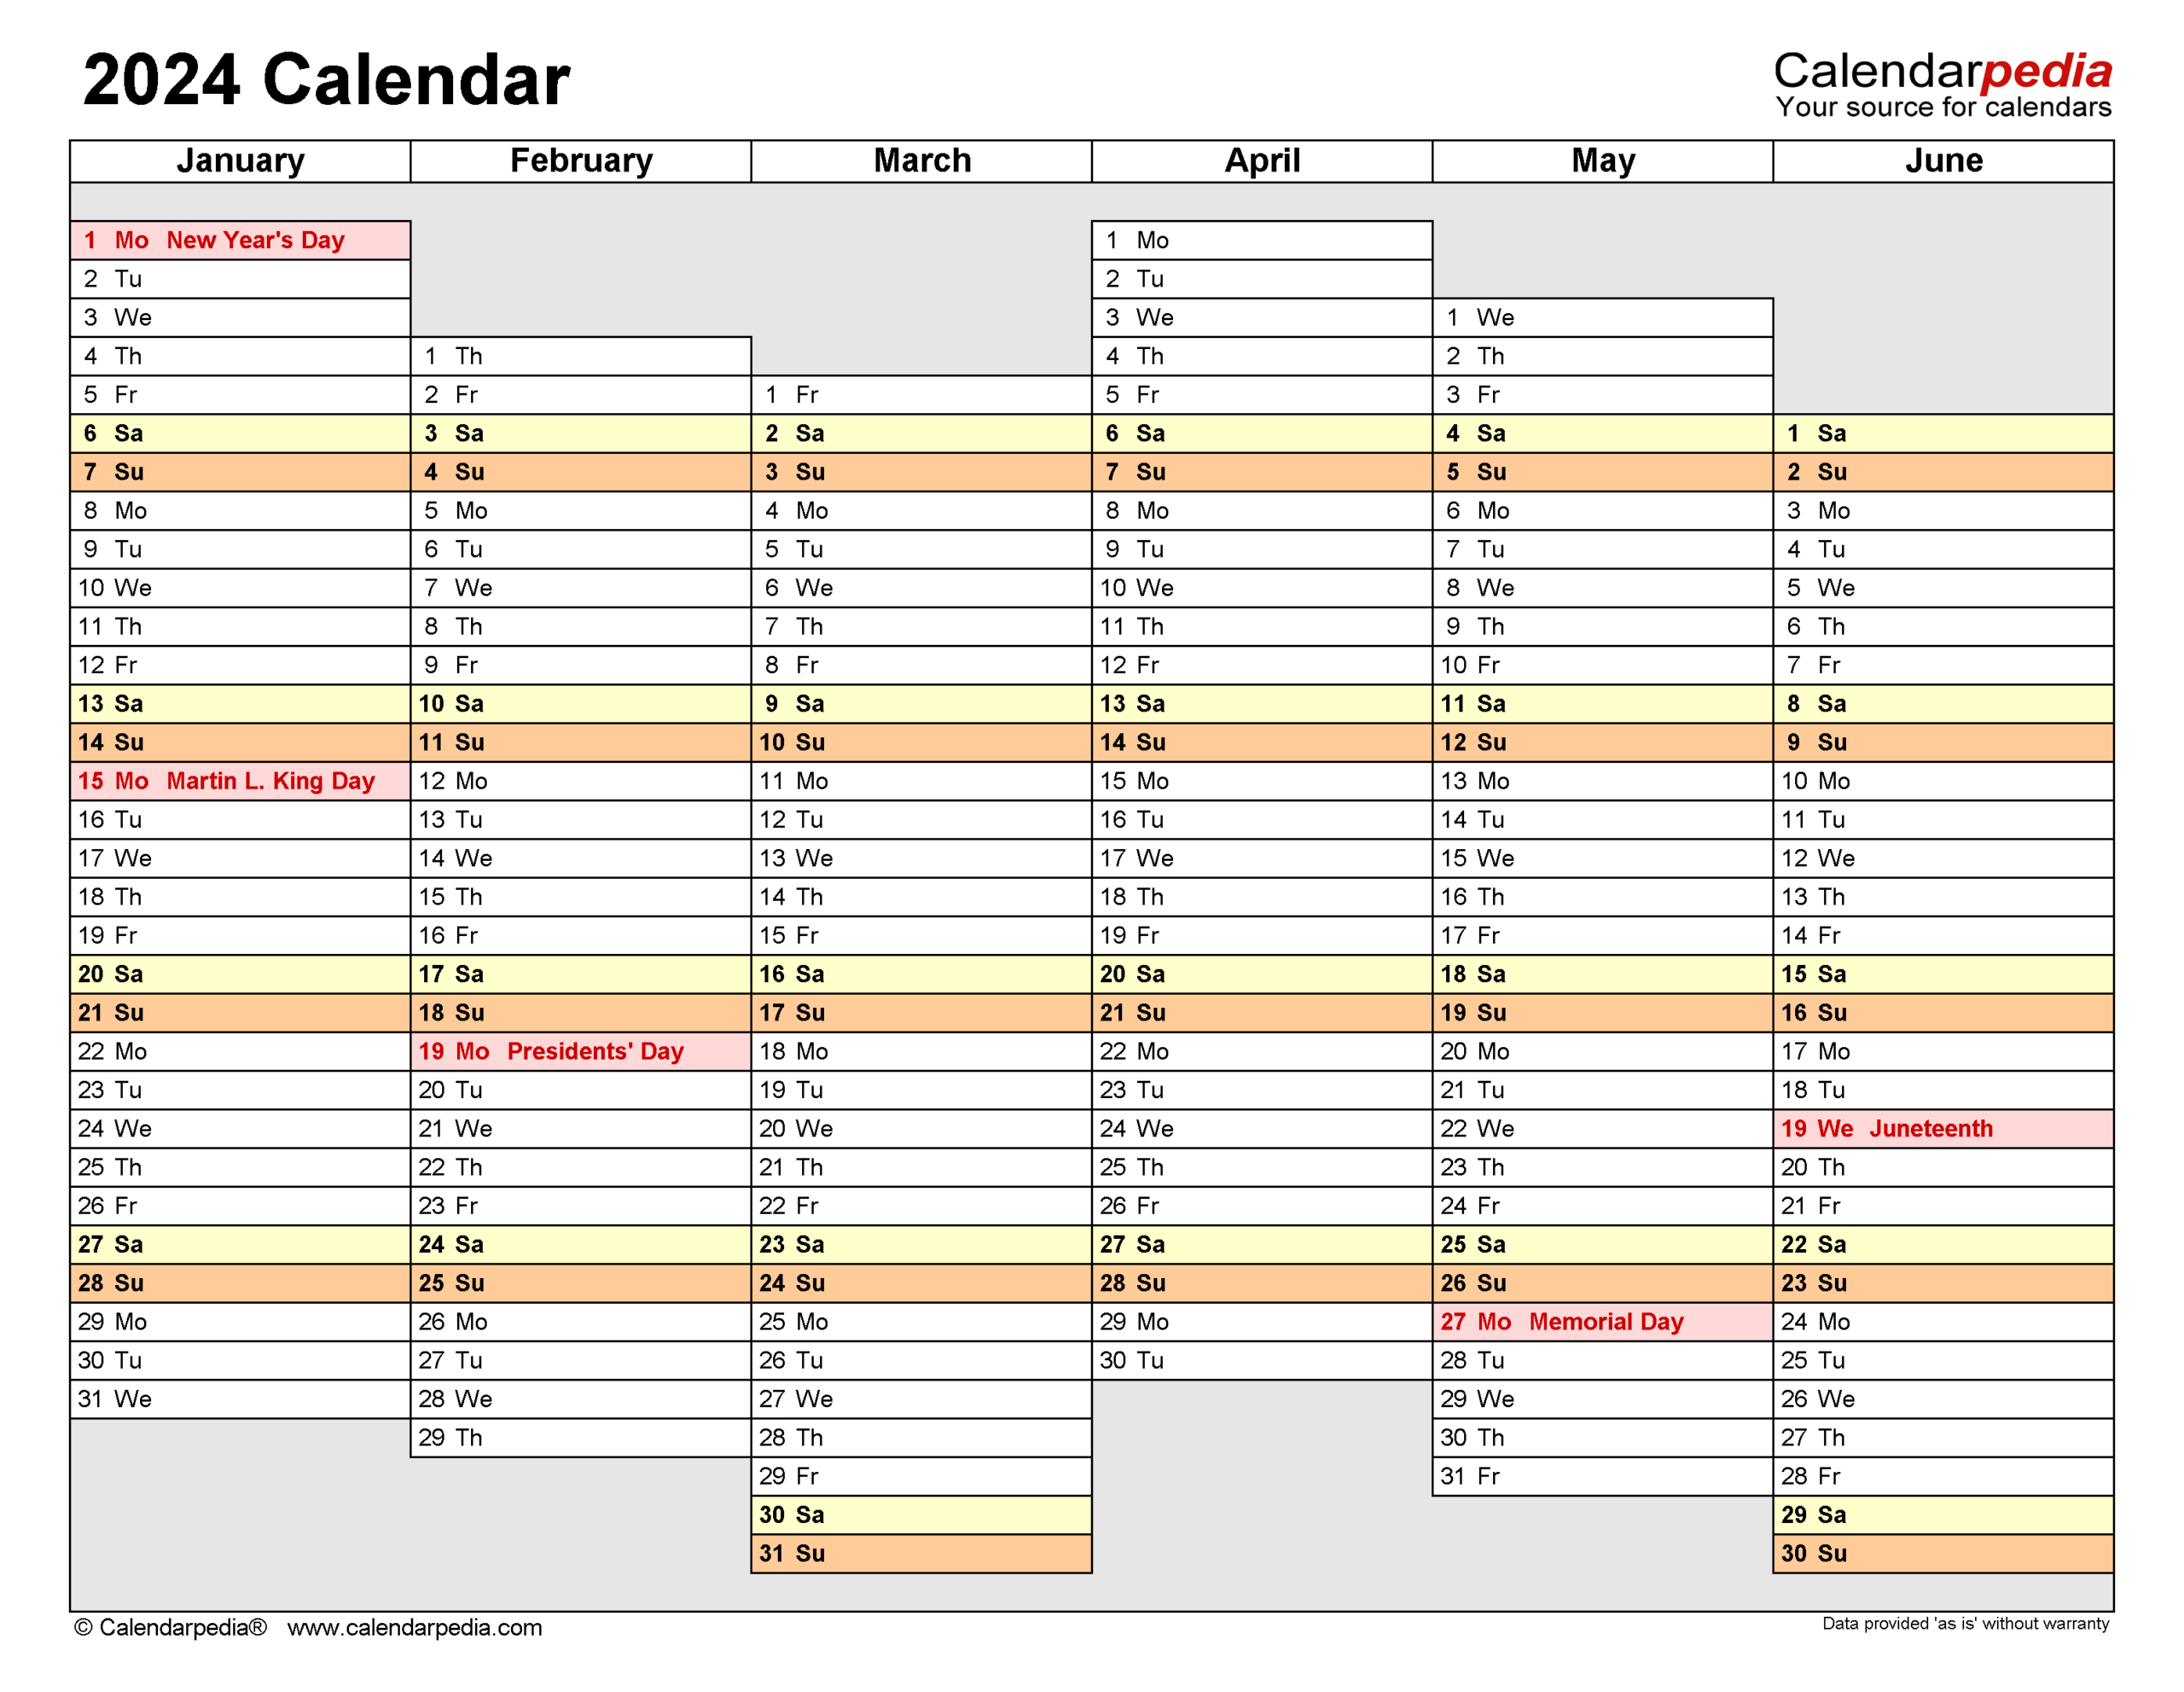 2024 Calendar - Free Printable Pdf Templates - Calendarpedia | Free Printable Calendar 2024 South Africa